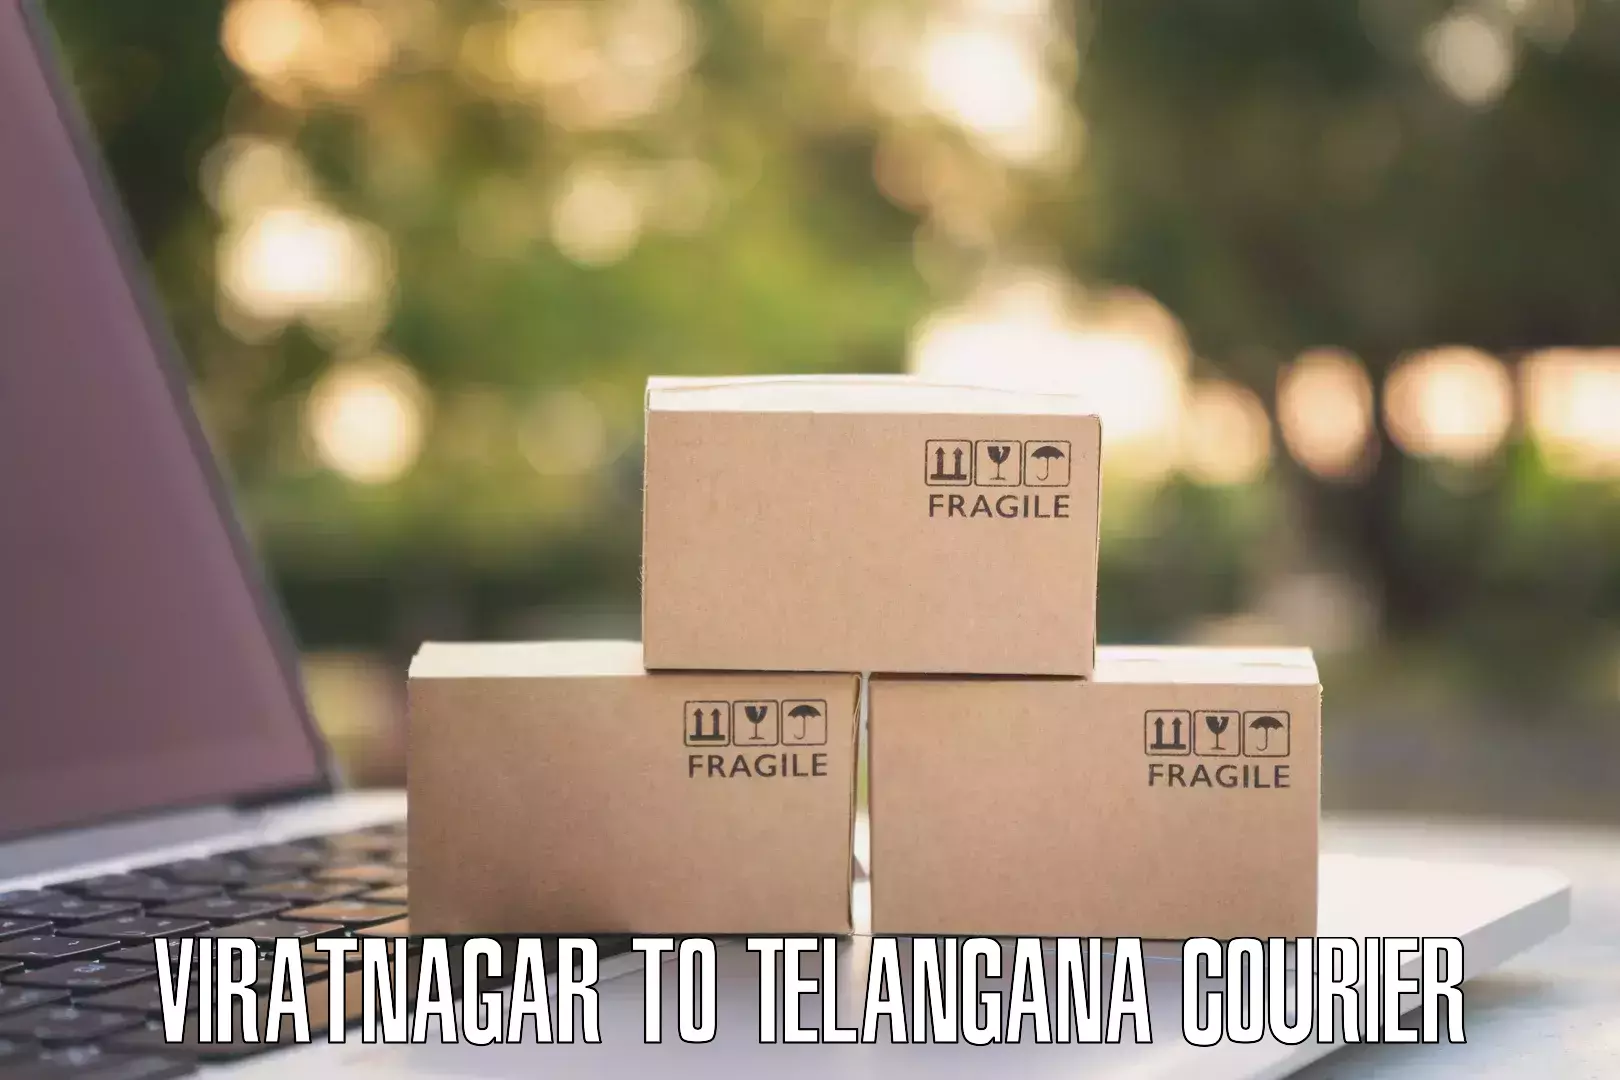 Digital courier platforms Viratnagar to Jagtial